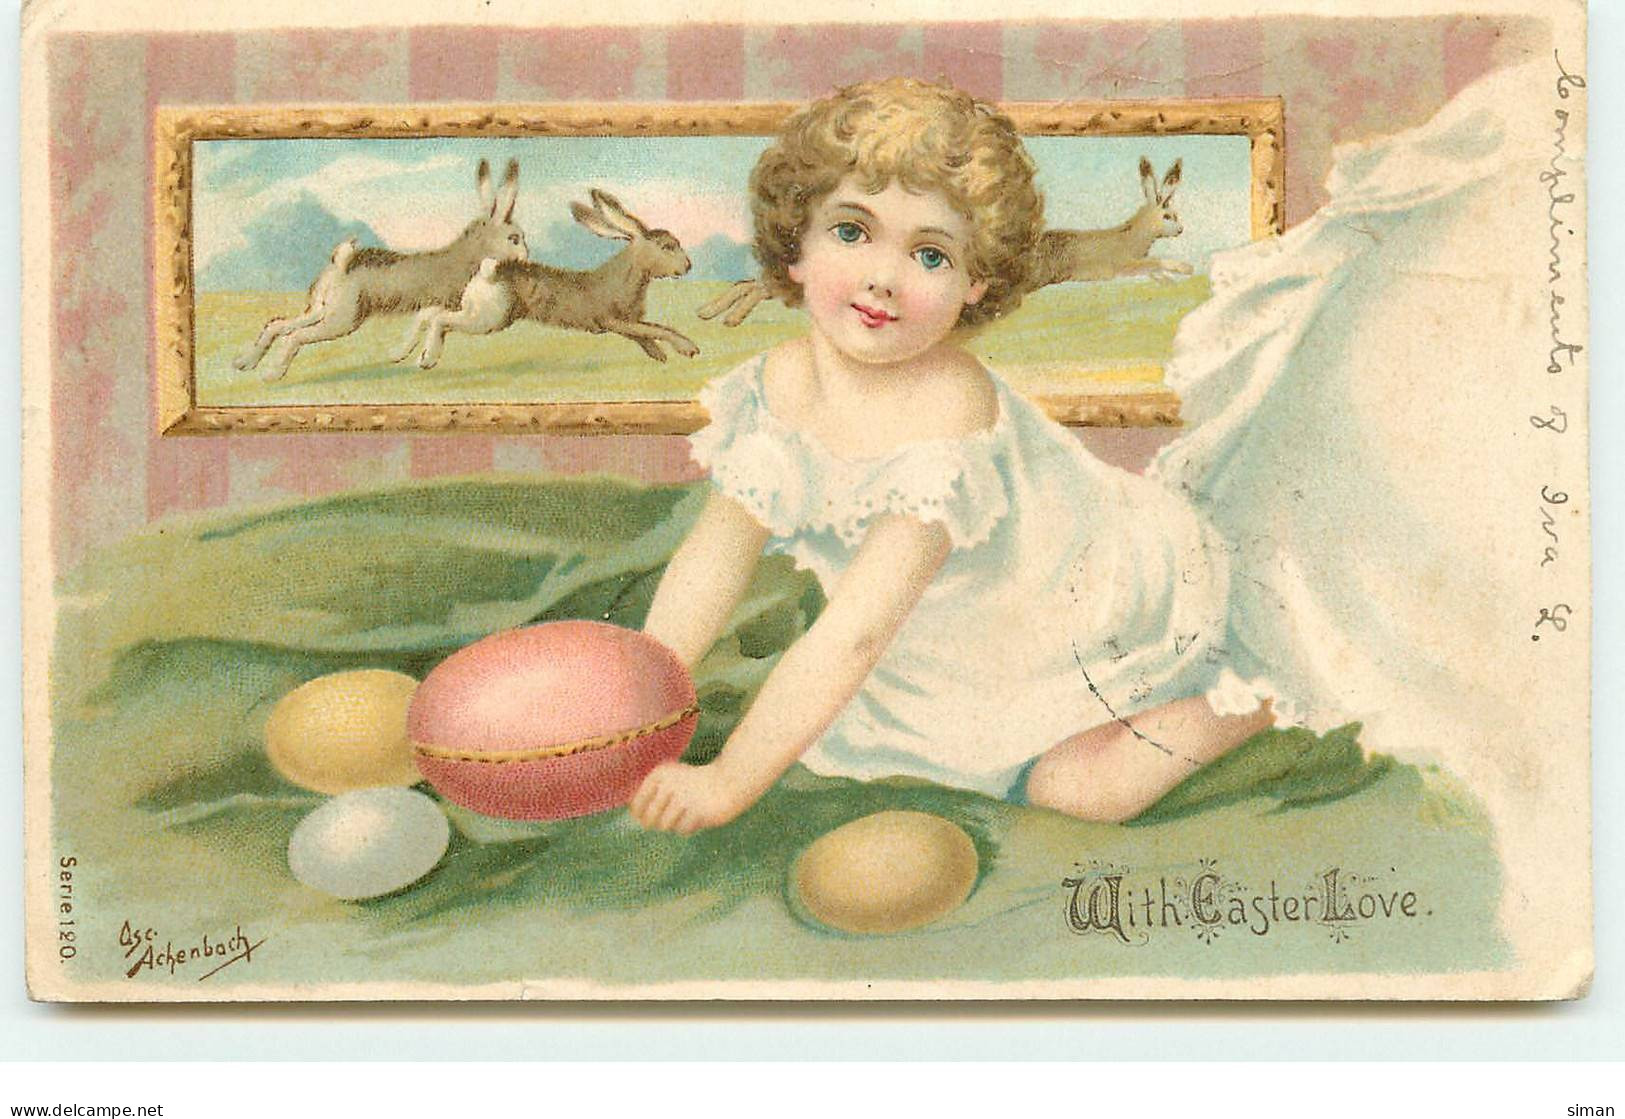 N°17334 - With Easter Love - Achenbach - Enfant Jouant Avec Des Oeufs - Easter